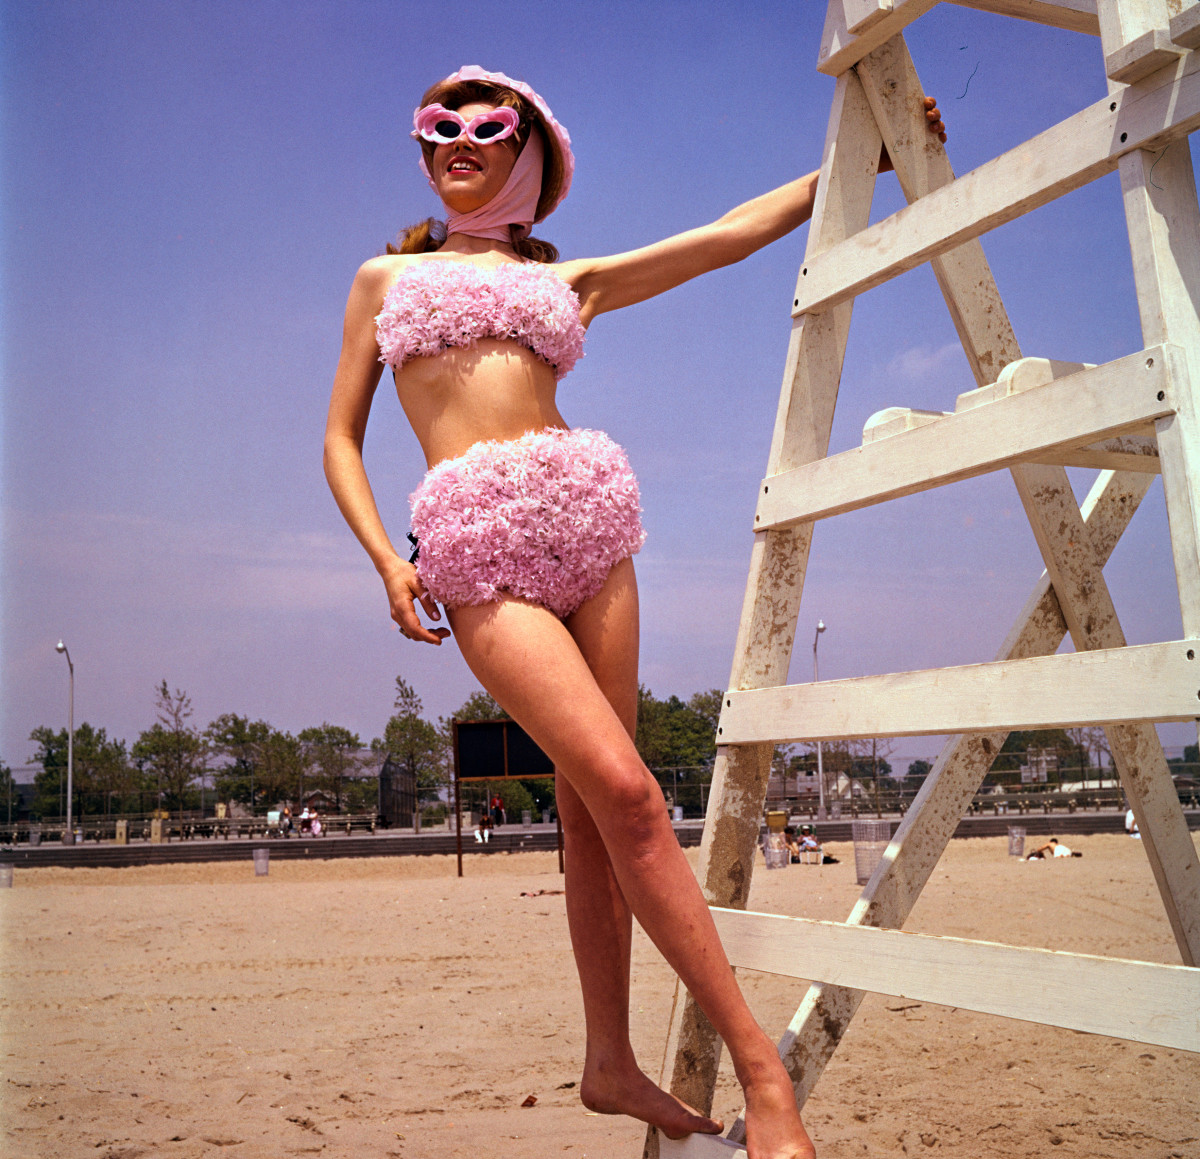 1960s bikini